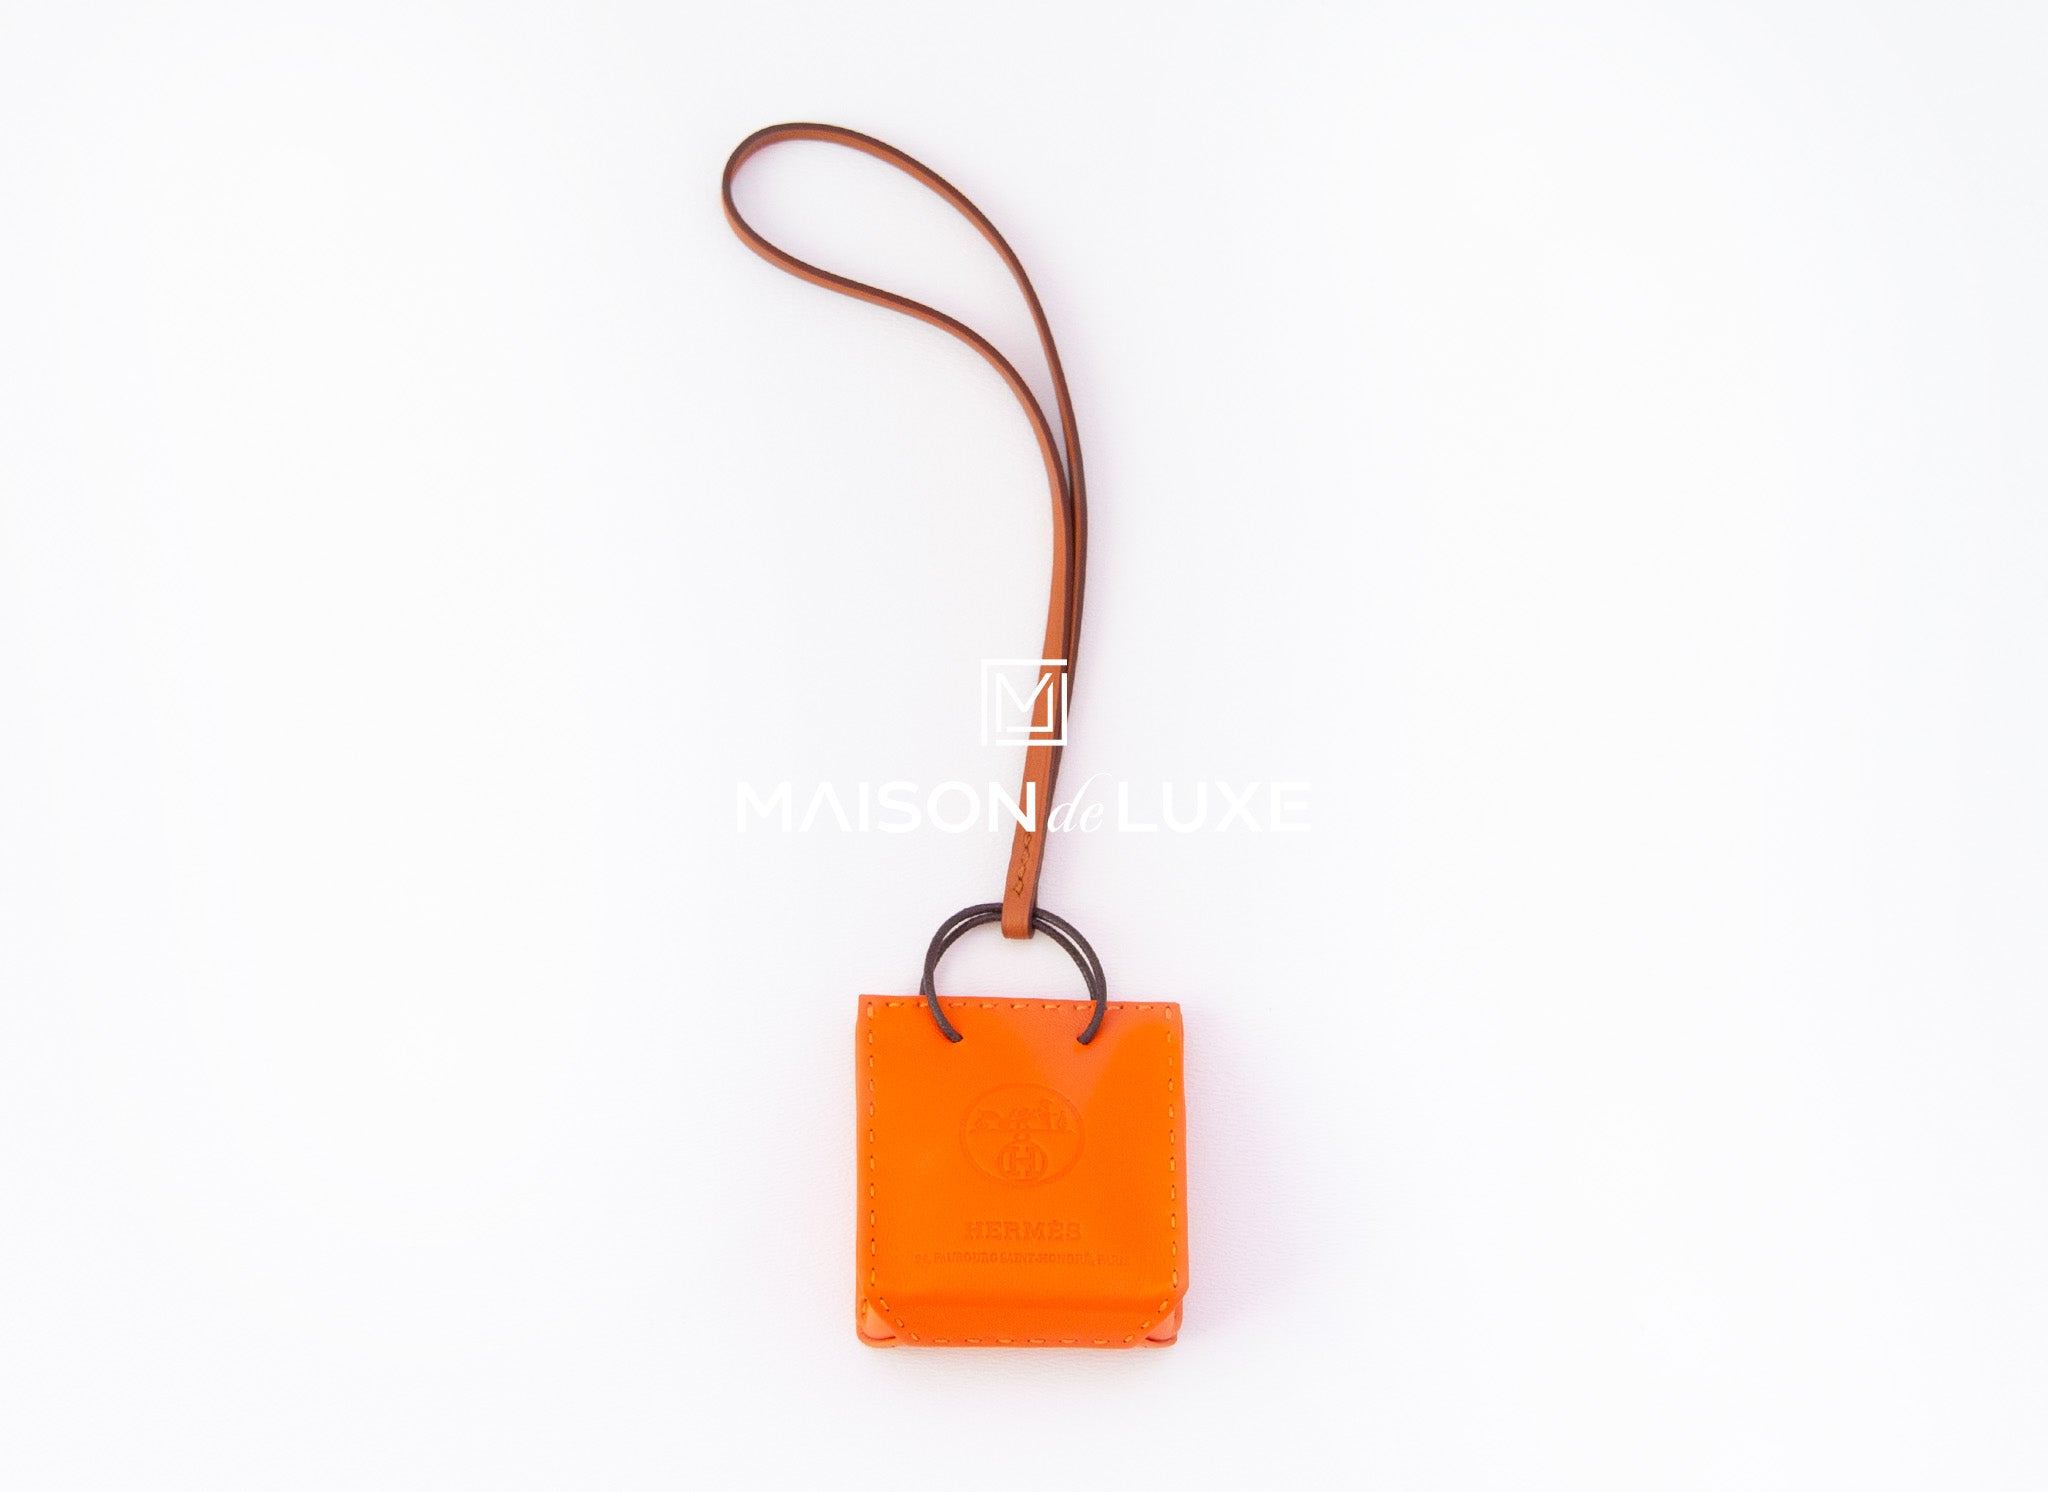 Brand New Hermes Orange Sac Bag Charm - 100% Authentic With Box +